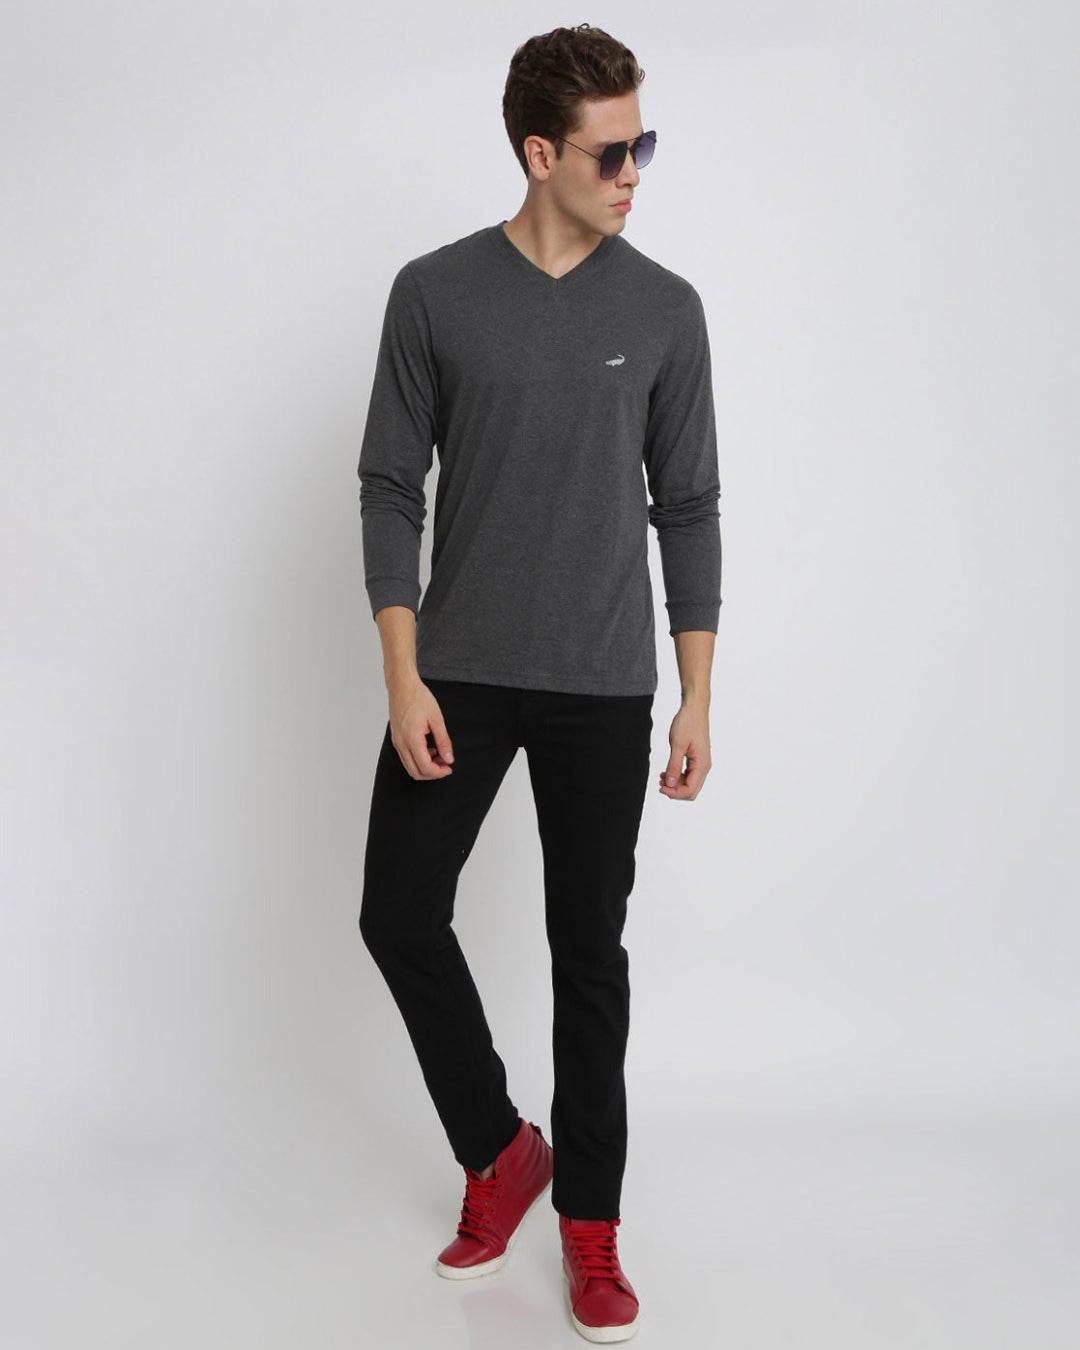 Men's Solid V Neck Full Sleeve Cotton T-Shirt - CHARCOAL MELANGE